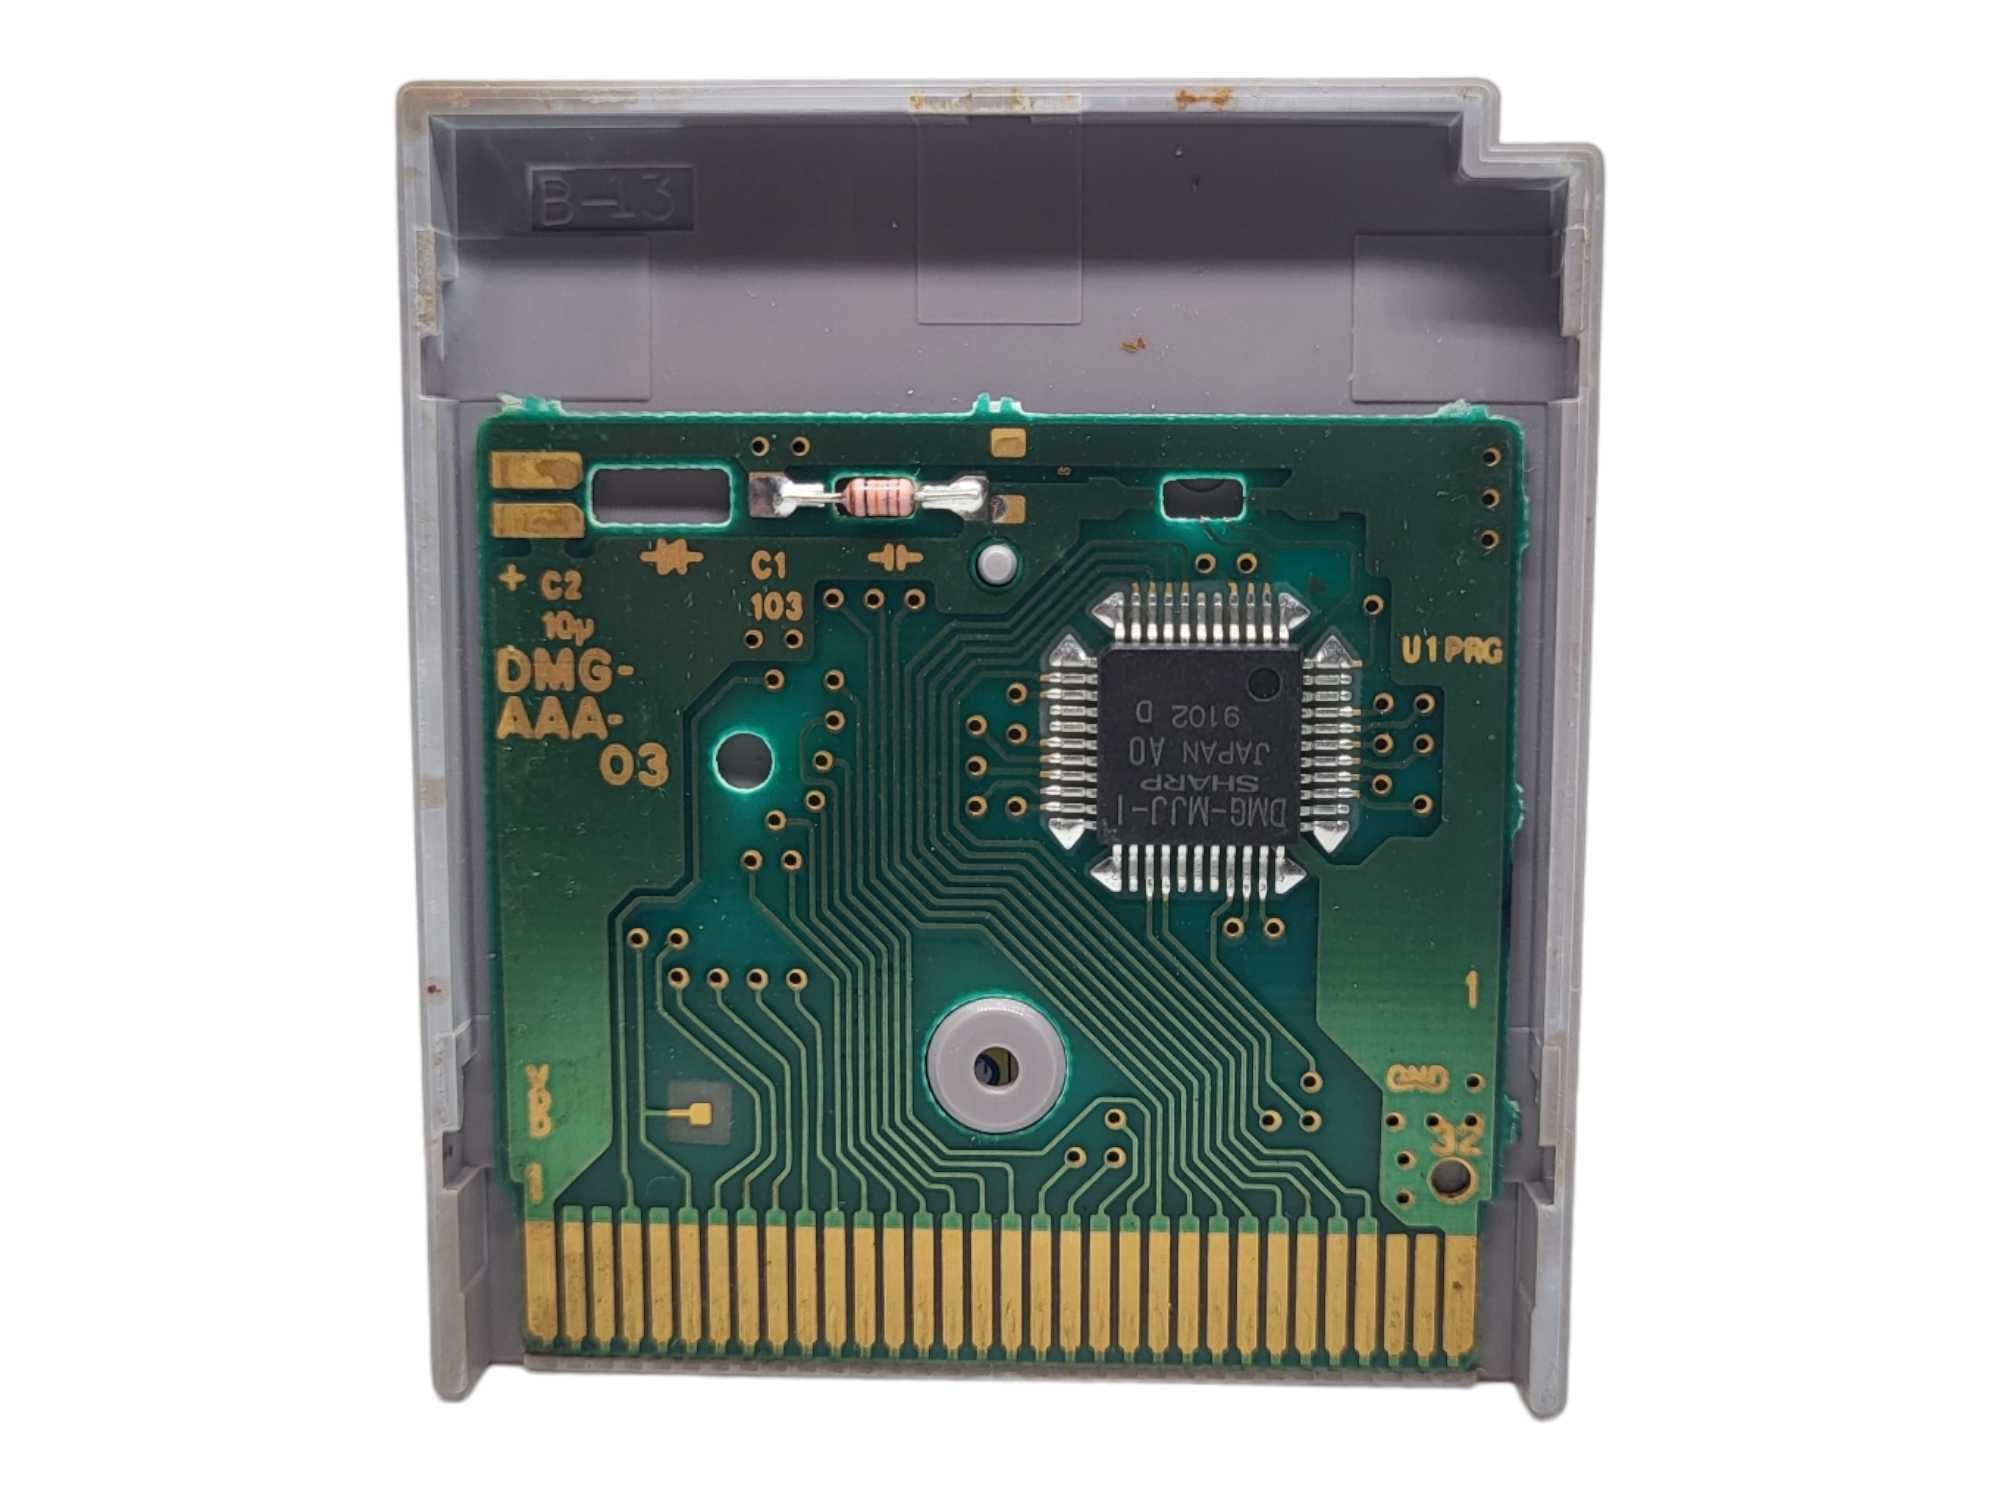 Yakuman Game Boy Gameboy Classic